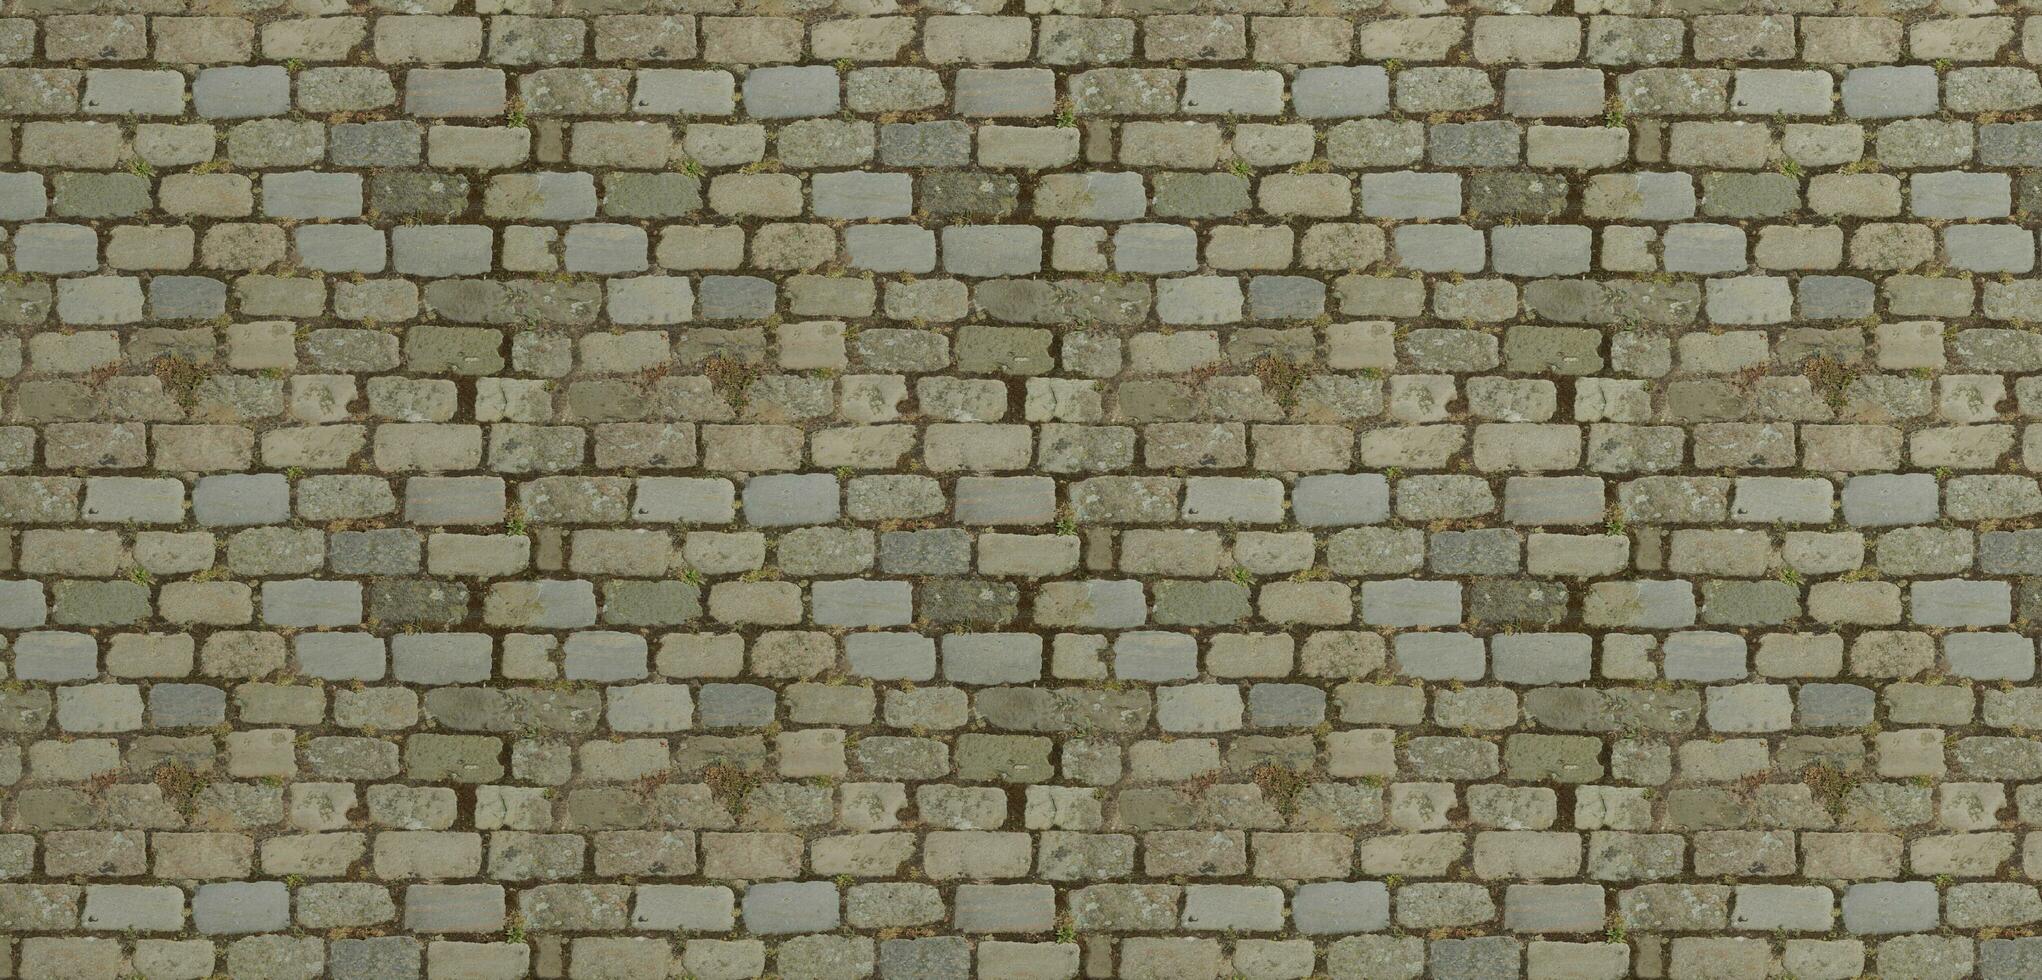 Road surface made of square stones gravel sidewalk Detail of cobblestones in old road Old granite road 3D illustration photo